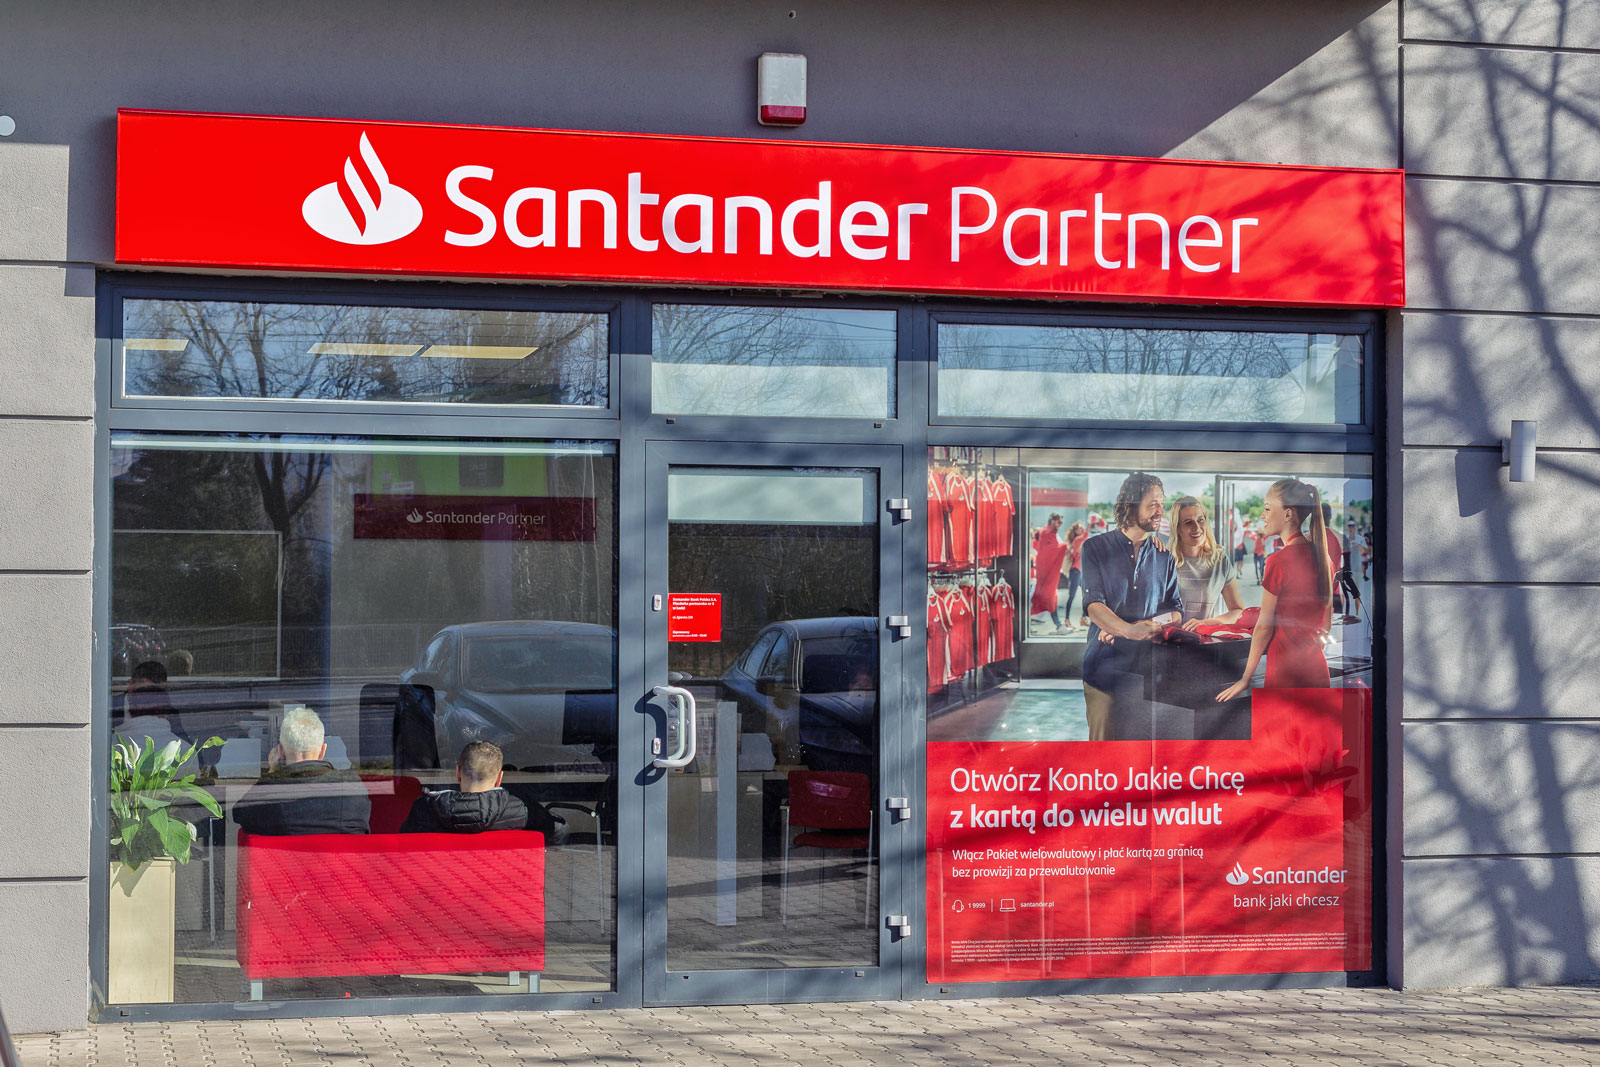 Santander Bank Polska Franchising.pl franczyza, pomysł na własny biznes